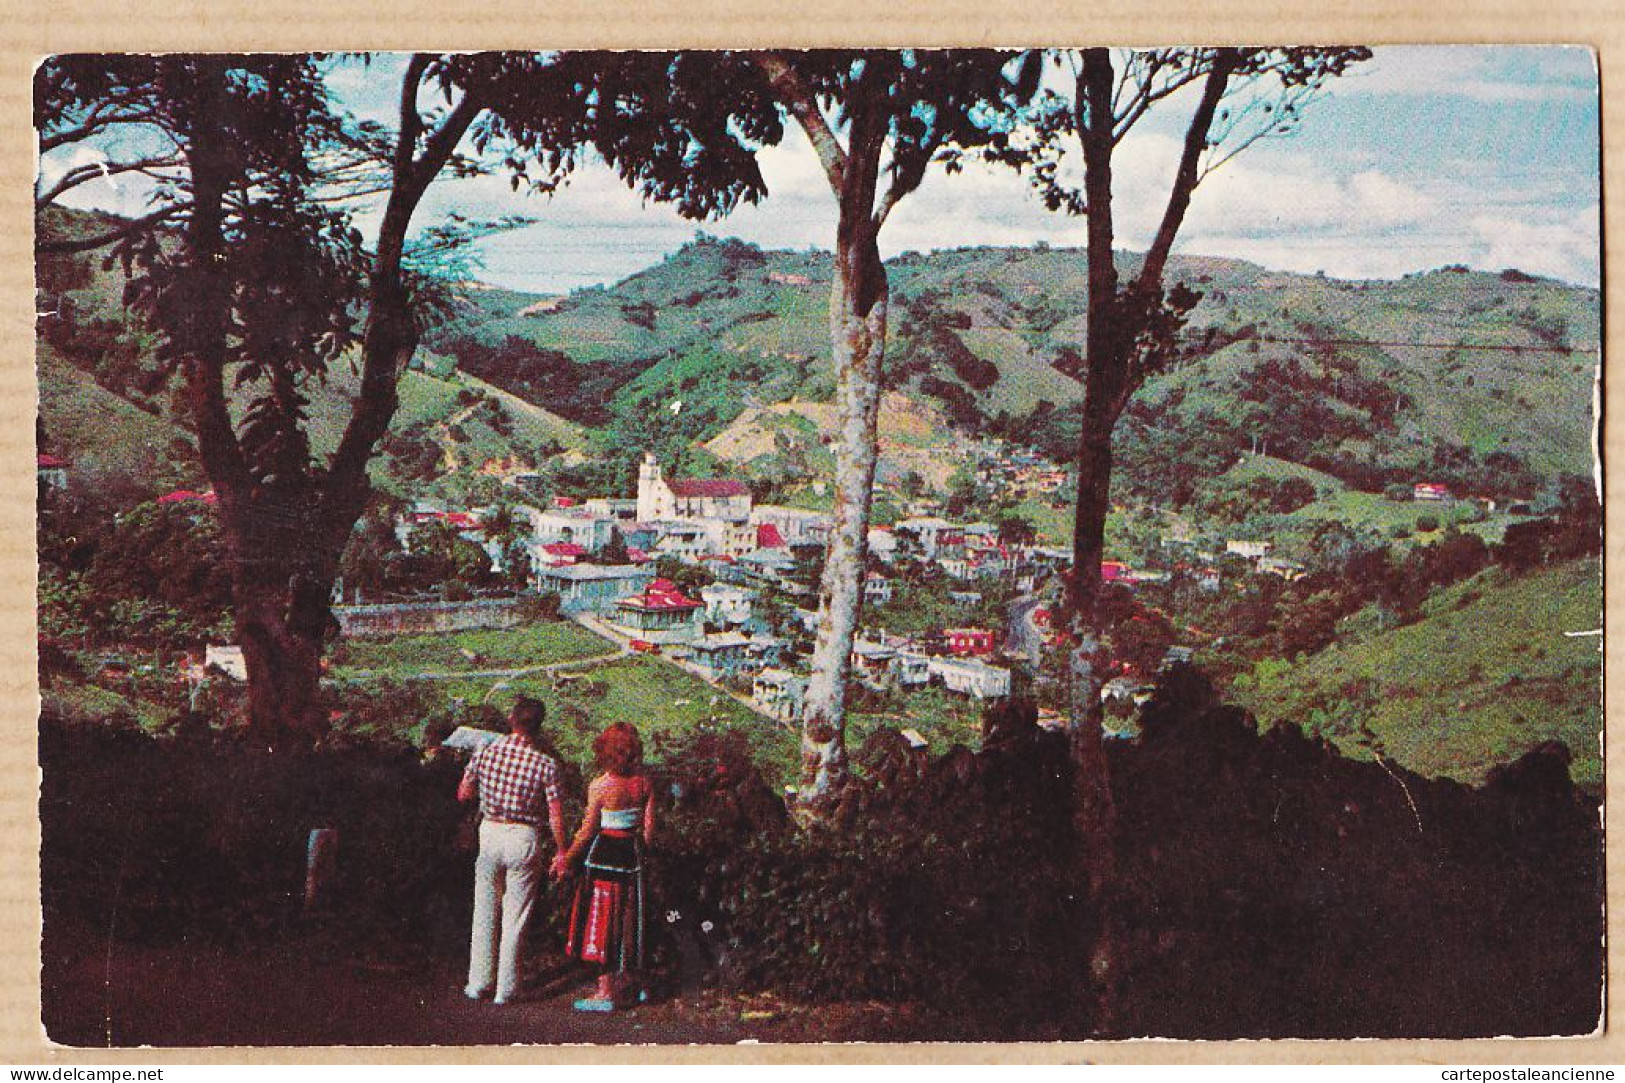 19964 / ⭐ PUERTO-RICO The Town Of Barranquitas Nestled In The Hills 1950s à G.ANDRE Bv Lefevre Paris XV - Puerto Rico